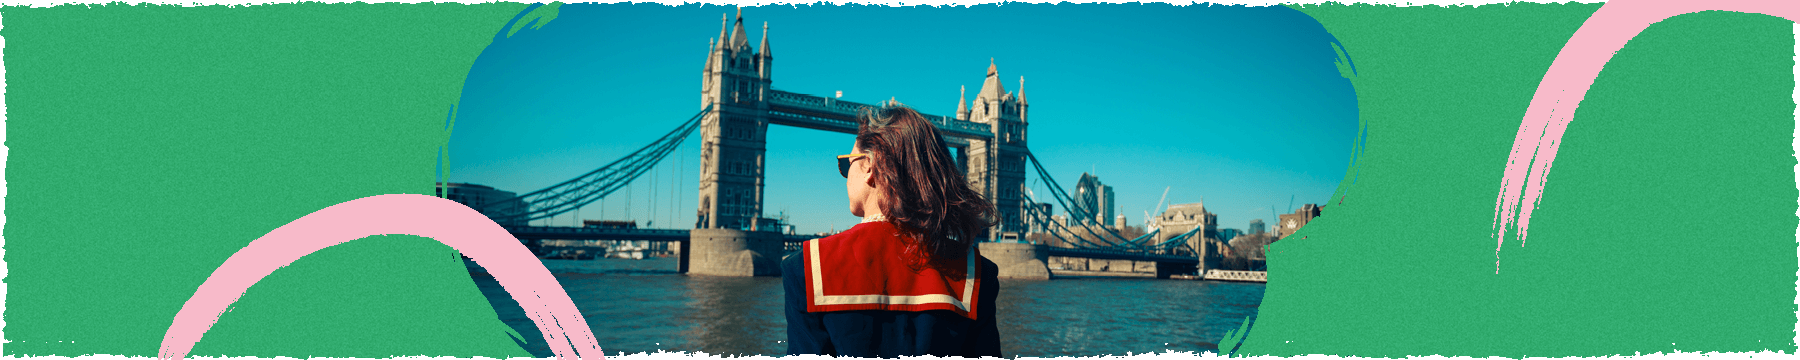 Tourist viewing the London Bridge